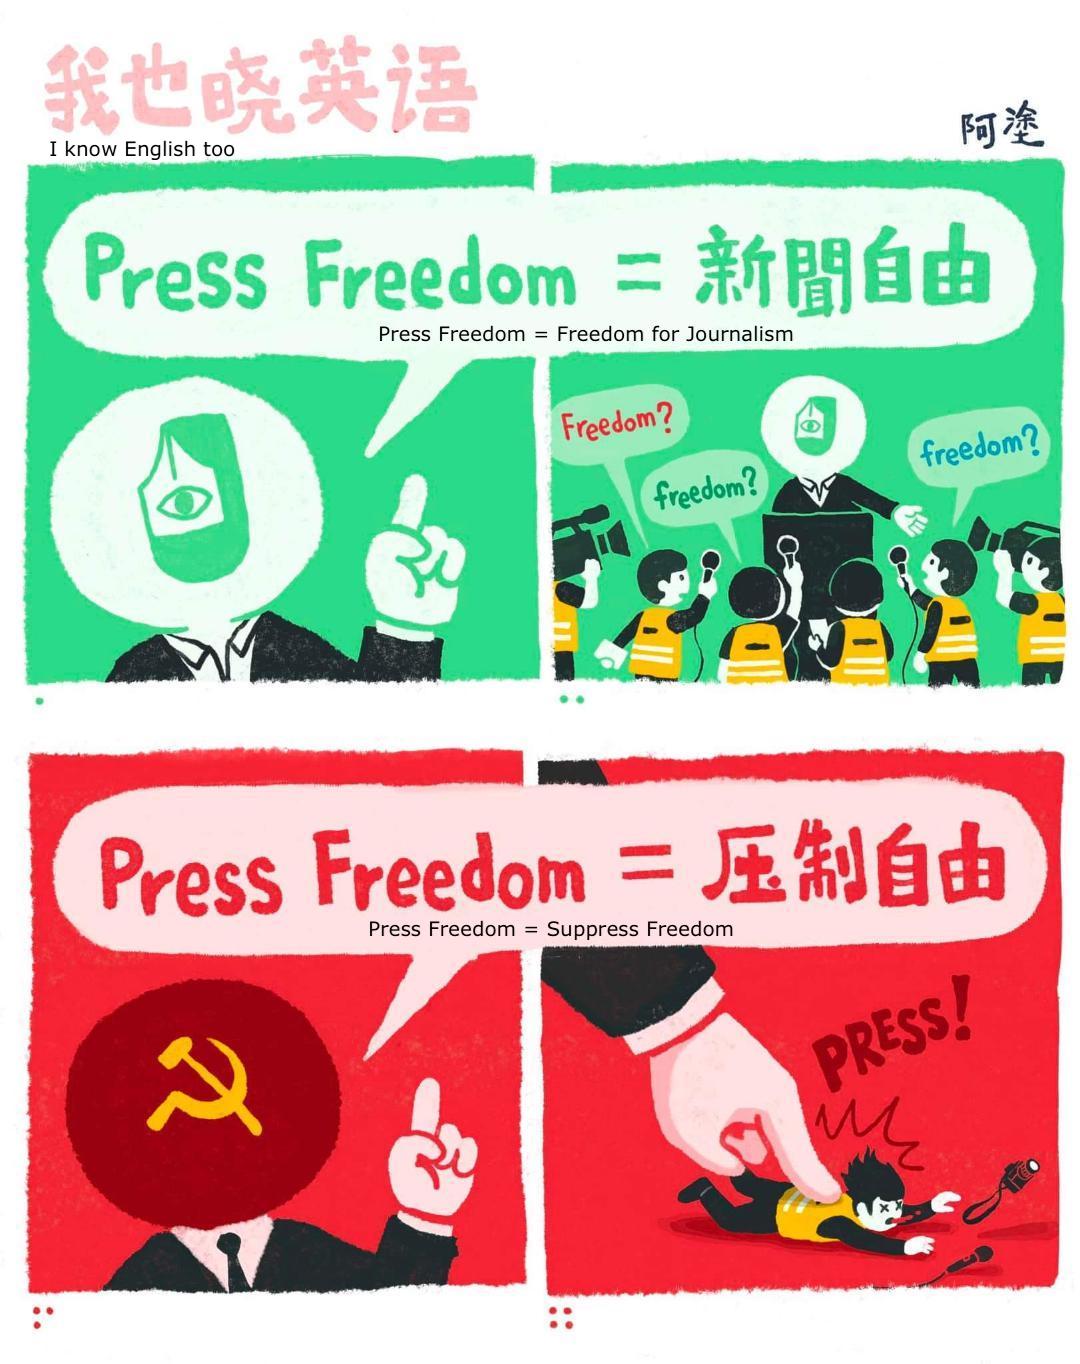 Press Freedom – ArtoHk